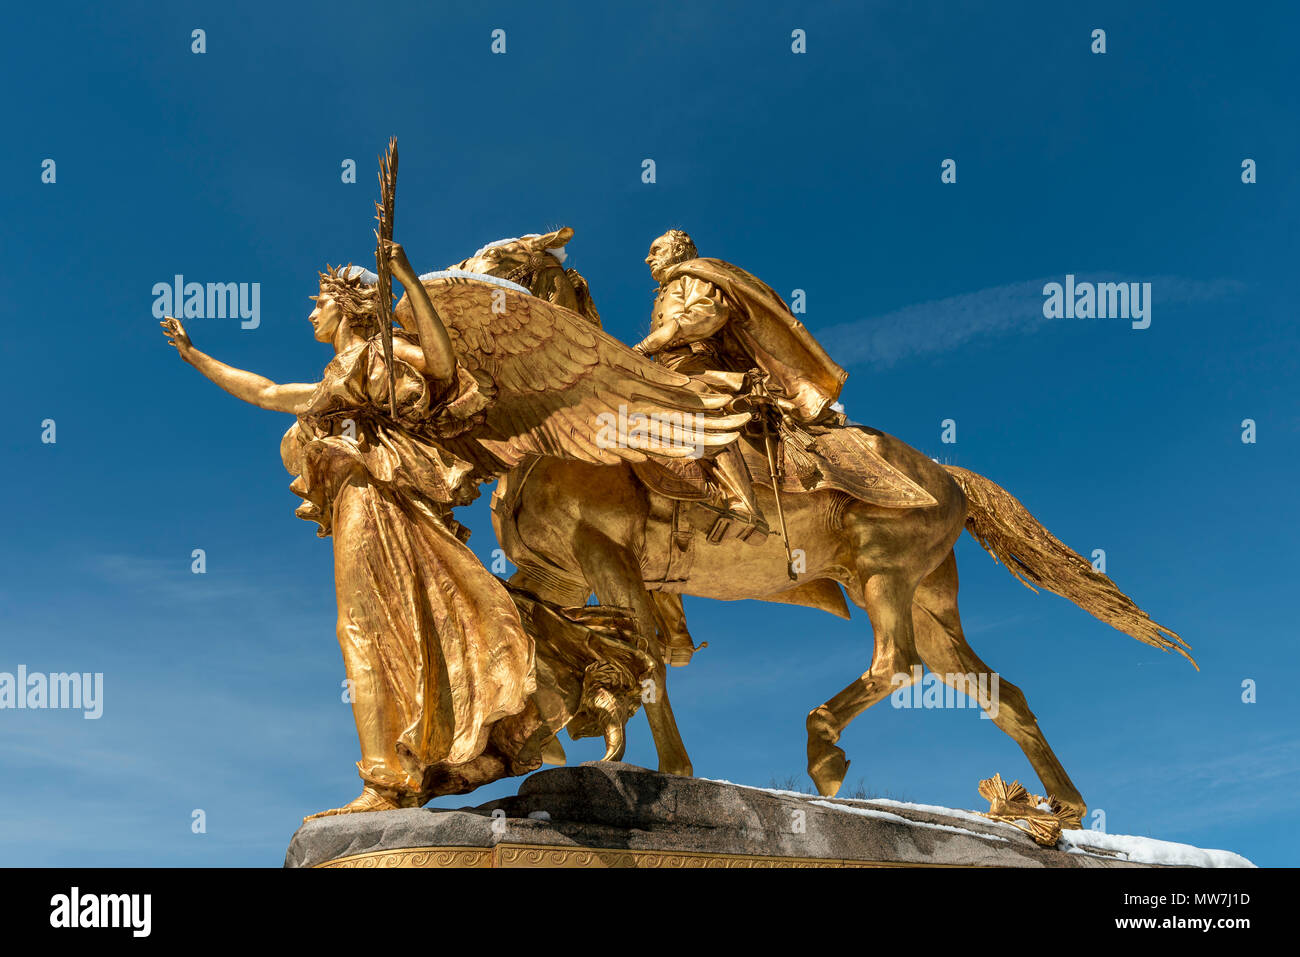 William Tecumseh Sherman Monument at Grand Army Plaza in Manhattan, New York, USA Stock Photo